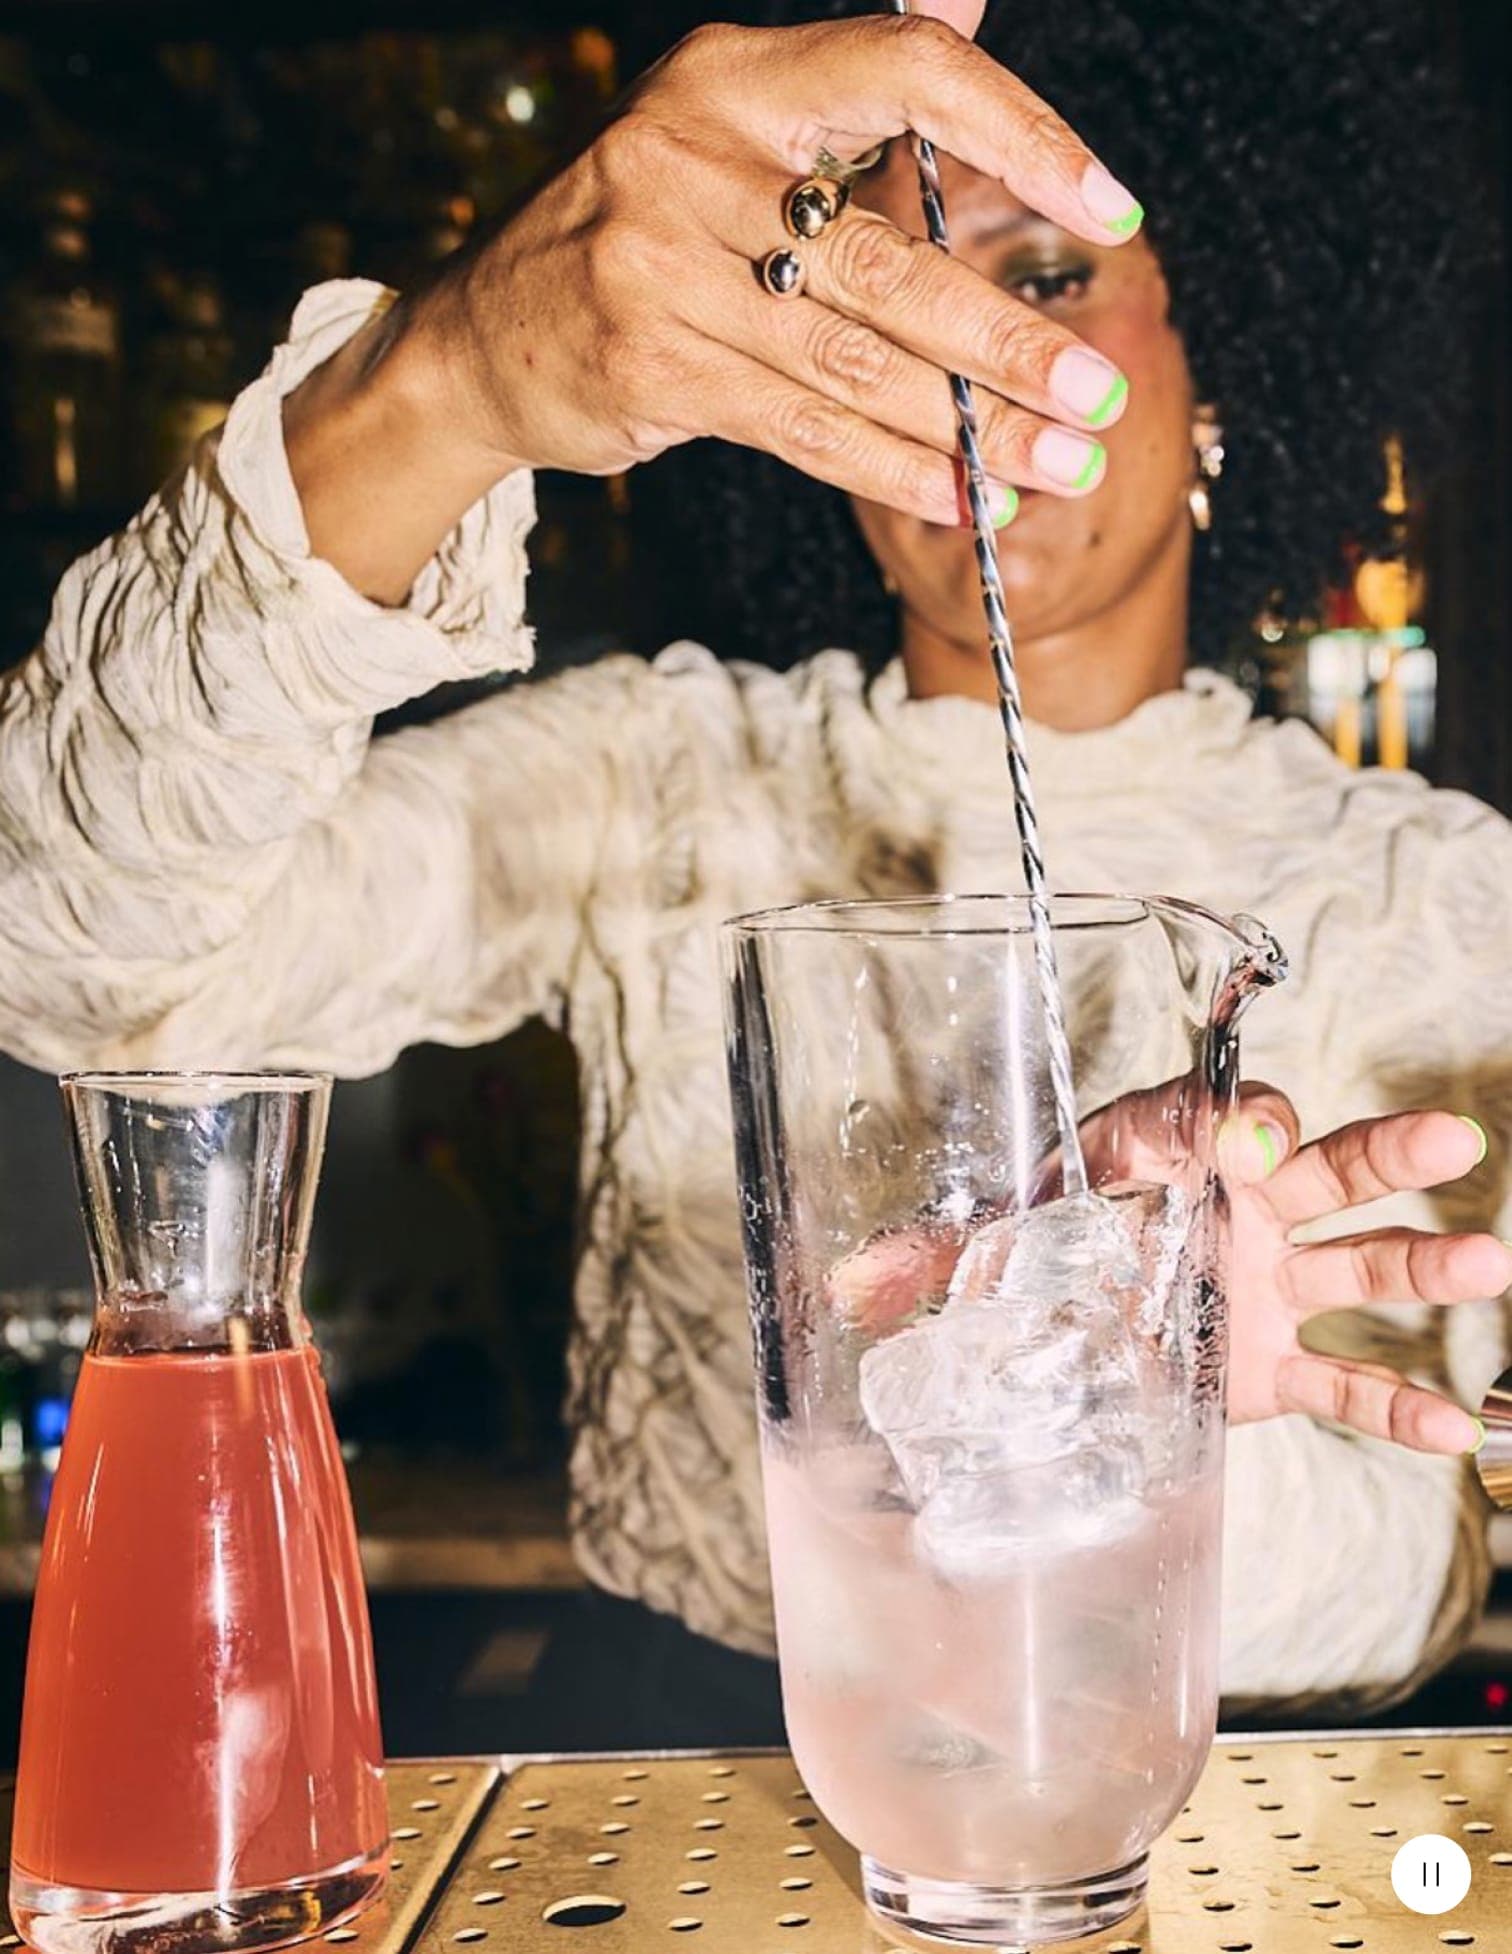 Juila Ba mixes a cocktail.